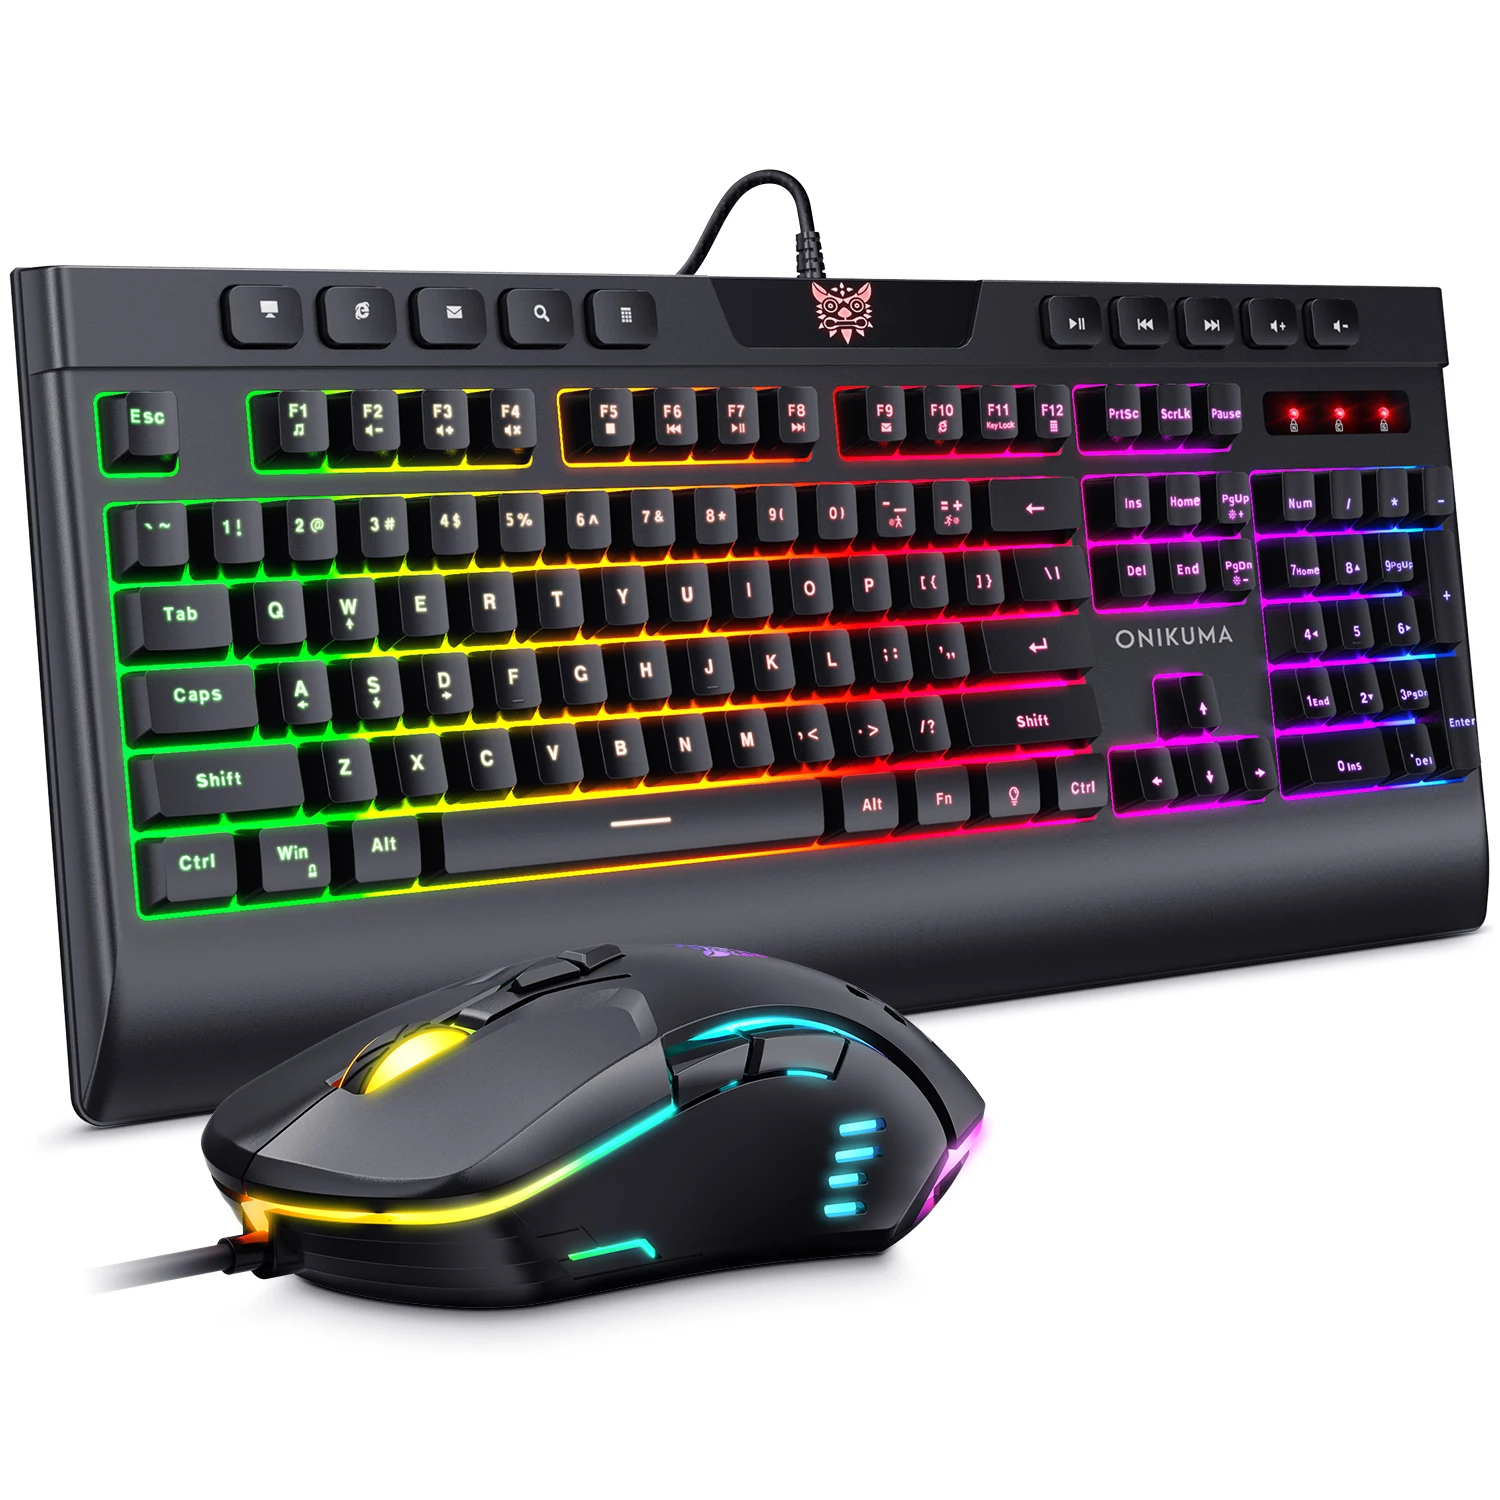 

ONIKUMA G21 CW902 RGB Light Professional Gaming Wired Mouse Keyboard Combo, Black